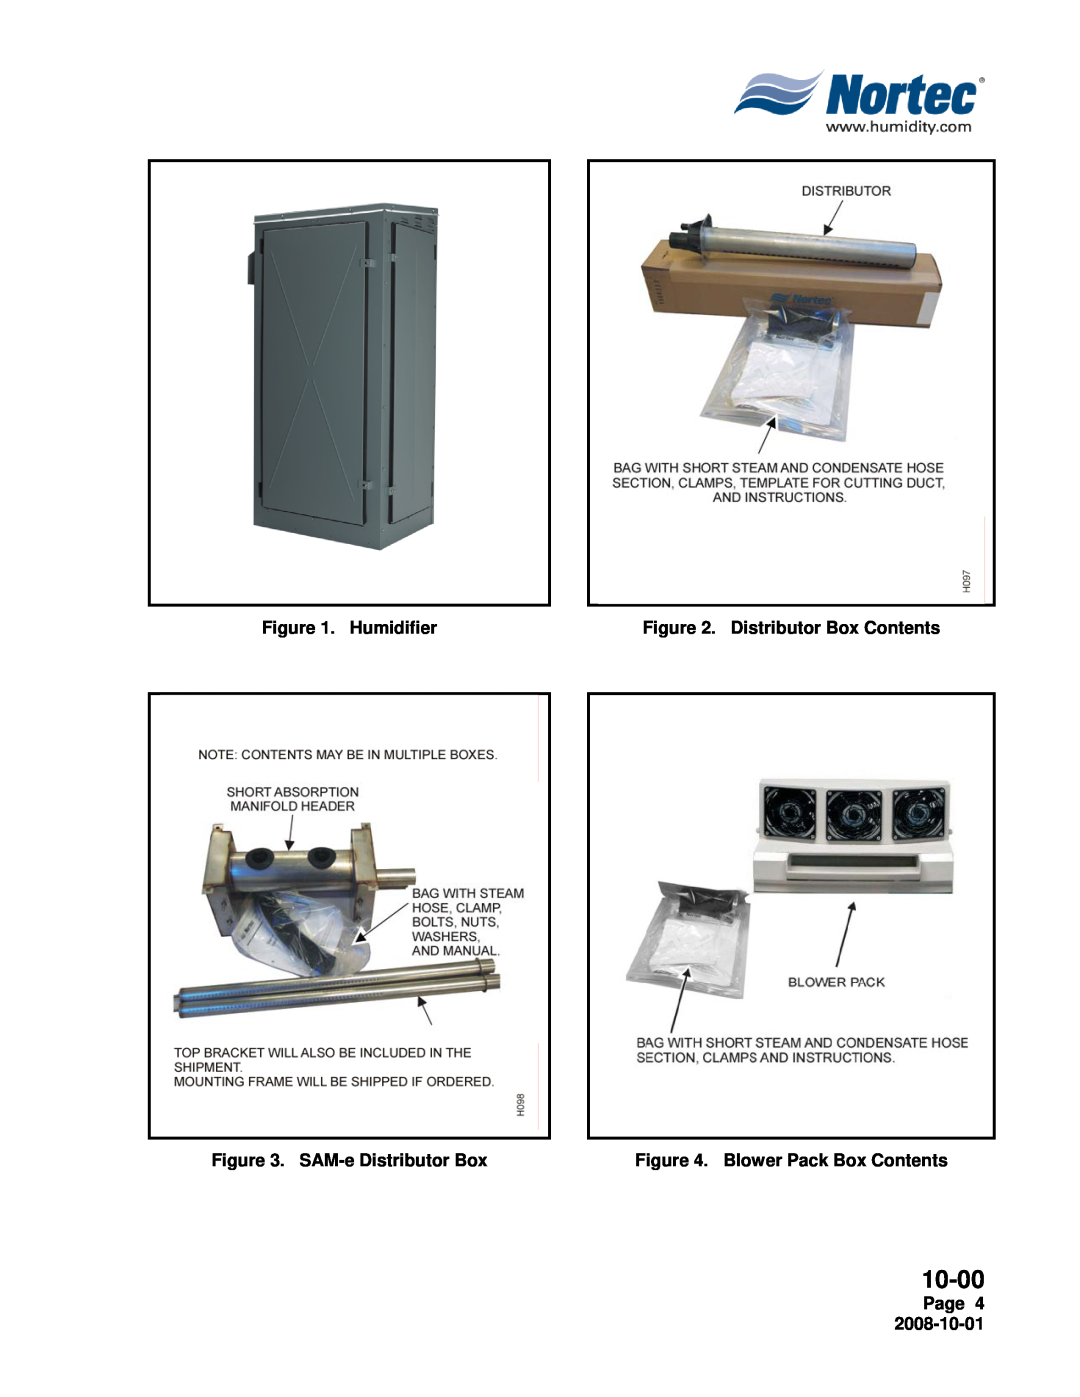 Nortec Industries NH Series 10-00, Humidifier, Distributor Box Contents, SAM-eDistributor Box, Blower Pack Box Contents 